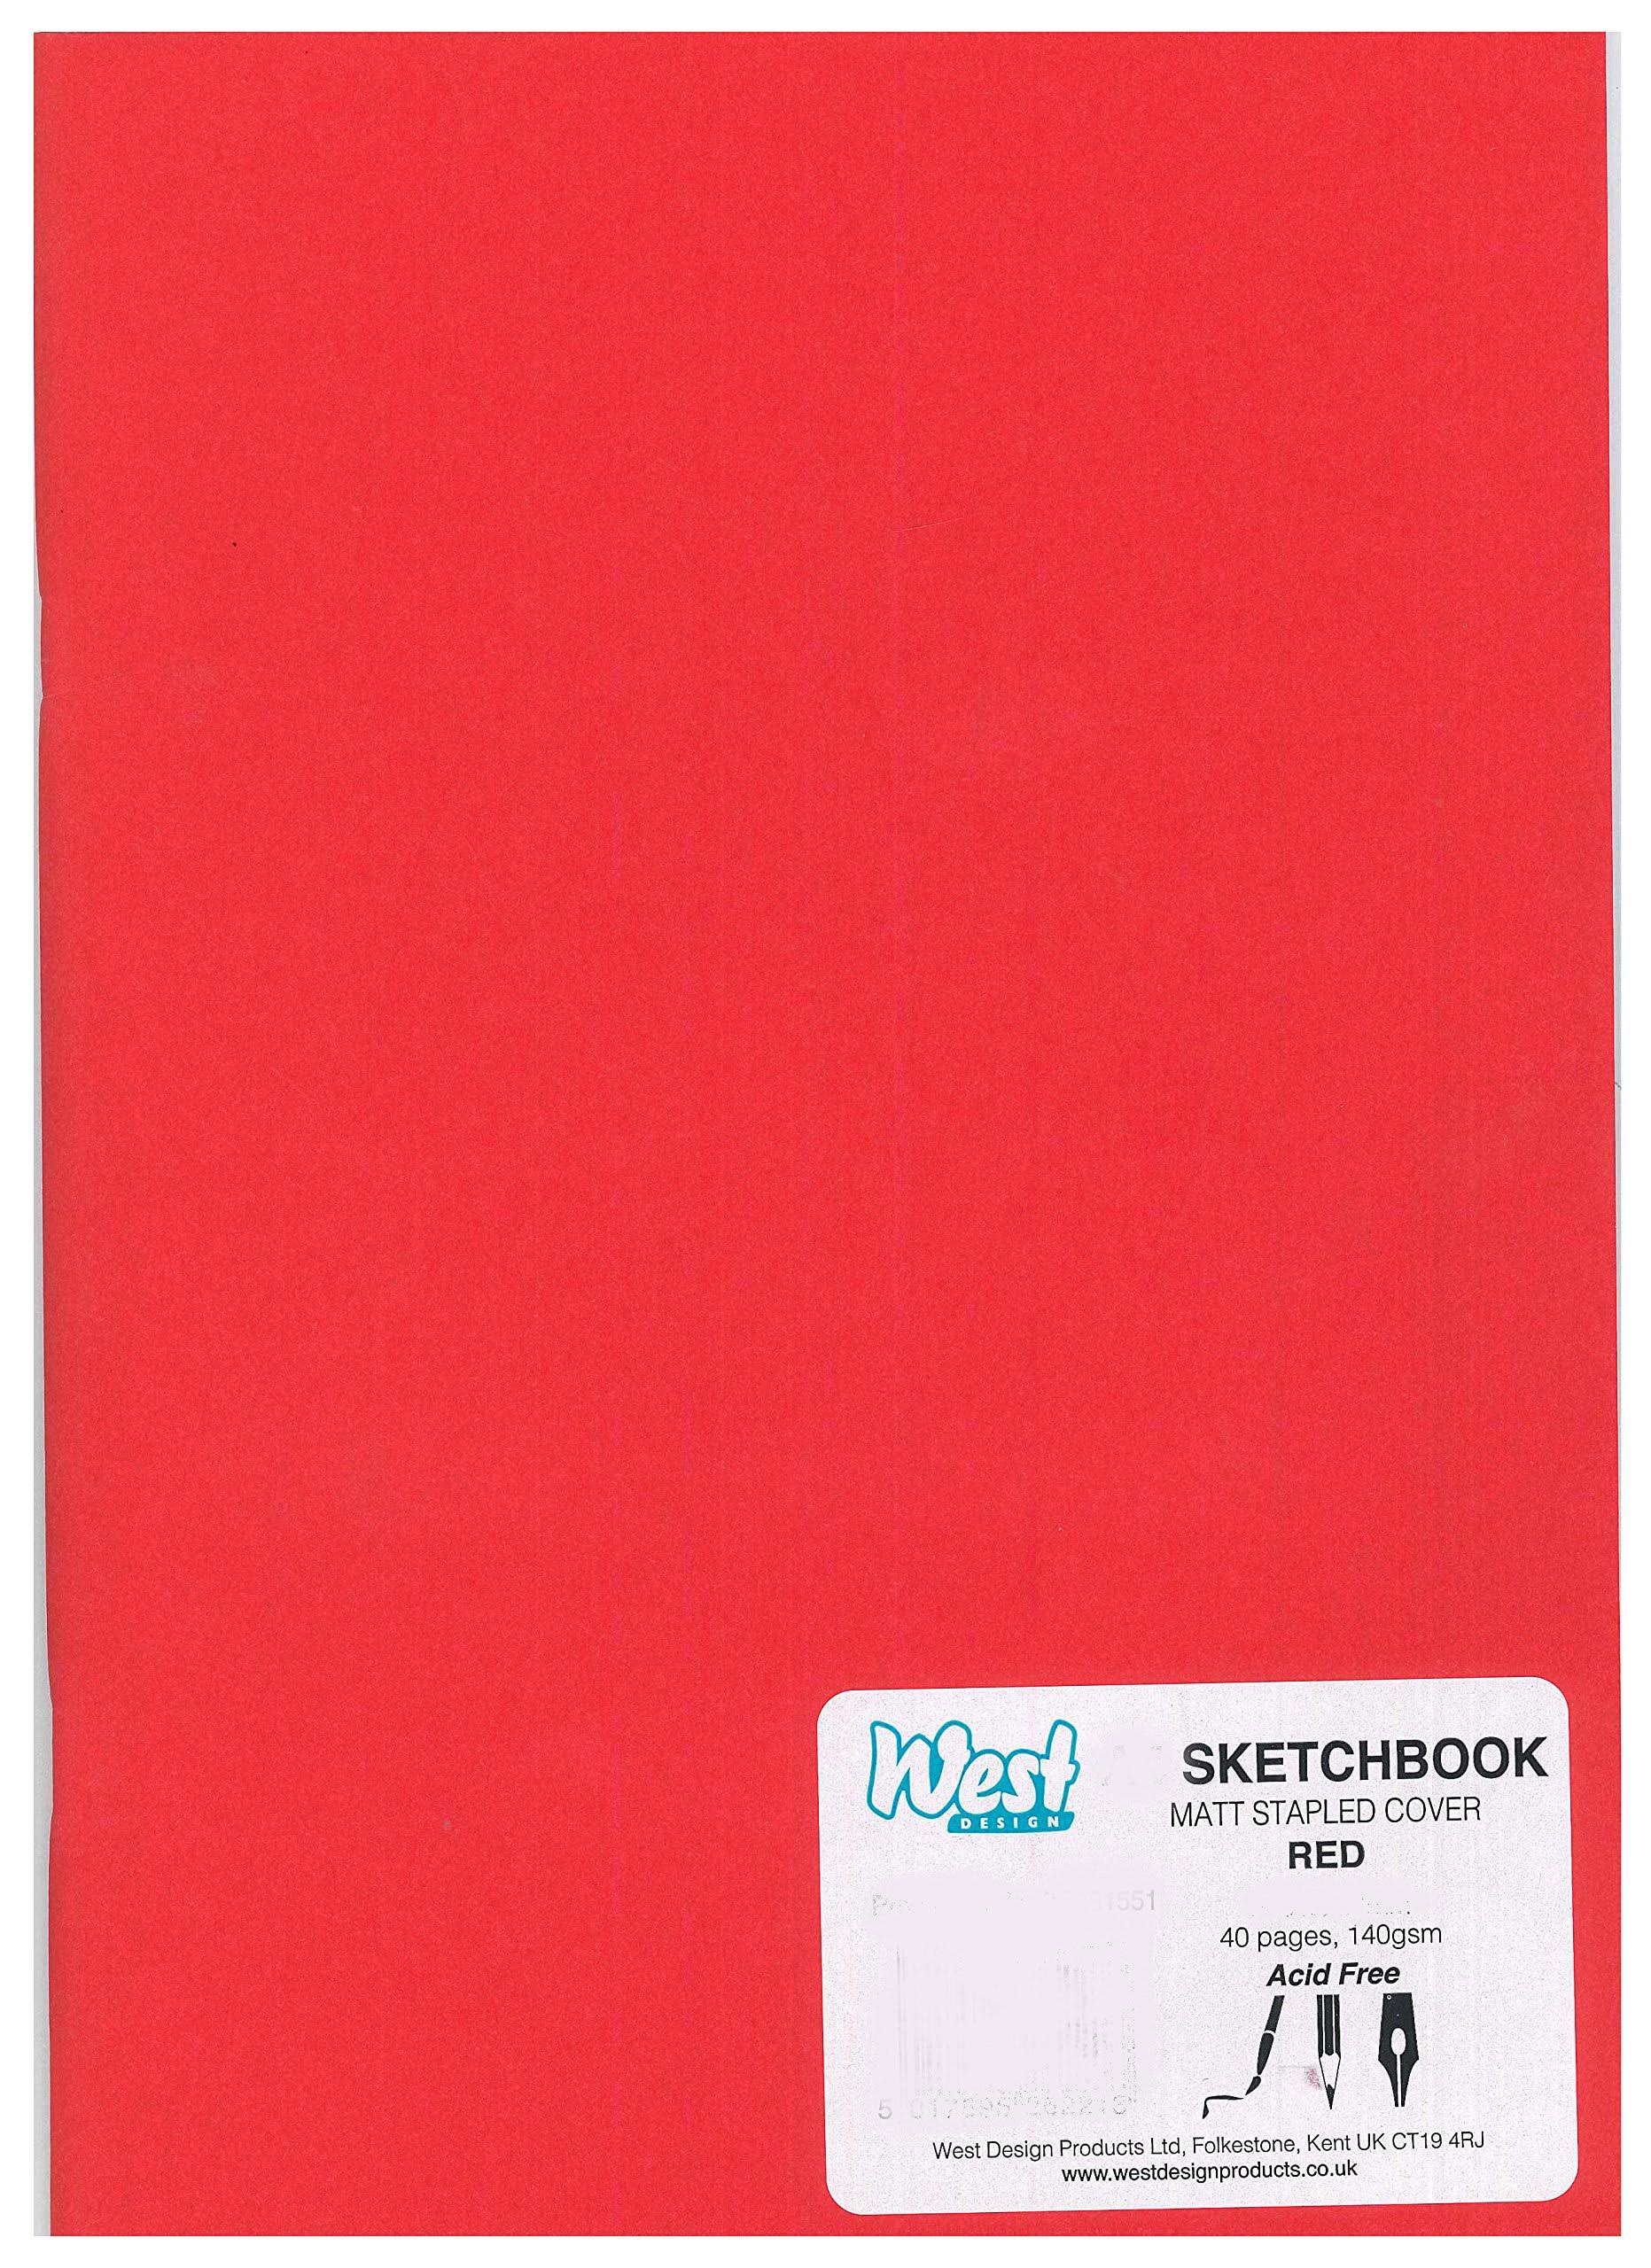 West - A3 Matt Sketchbook, 140gsm 40 pages, Red